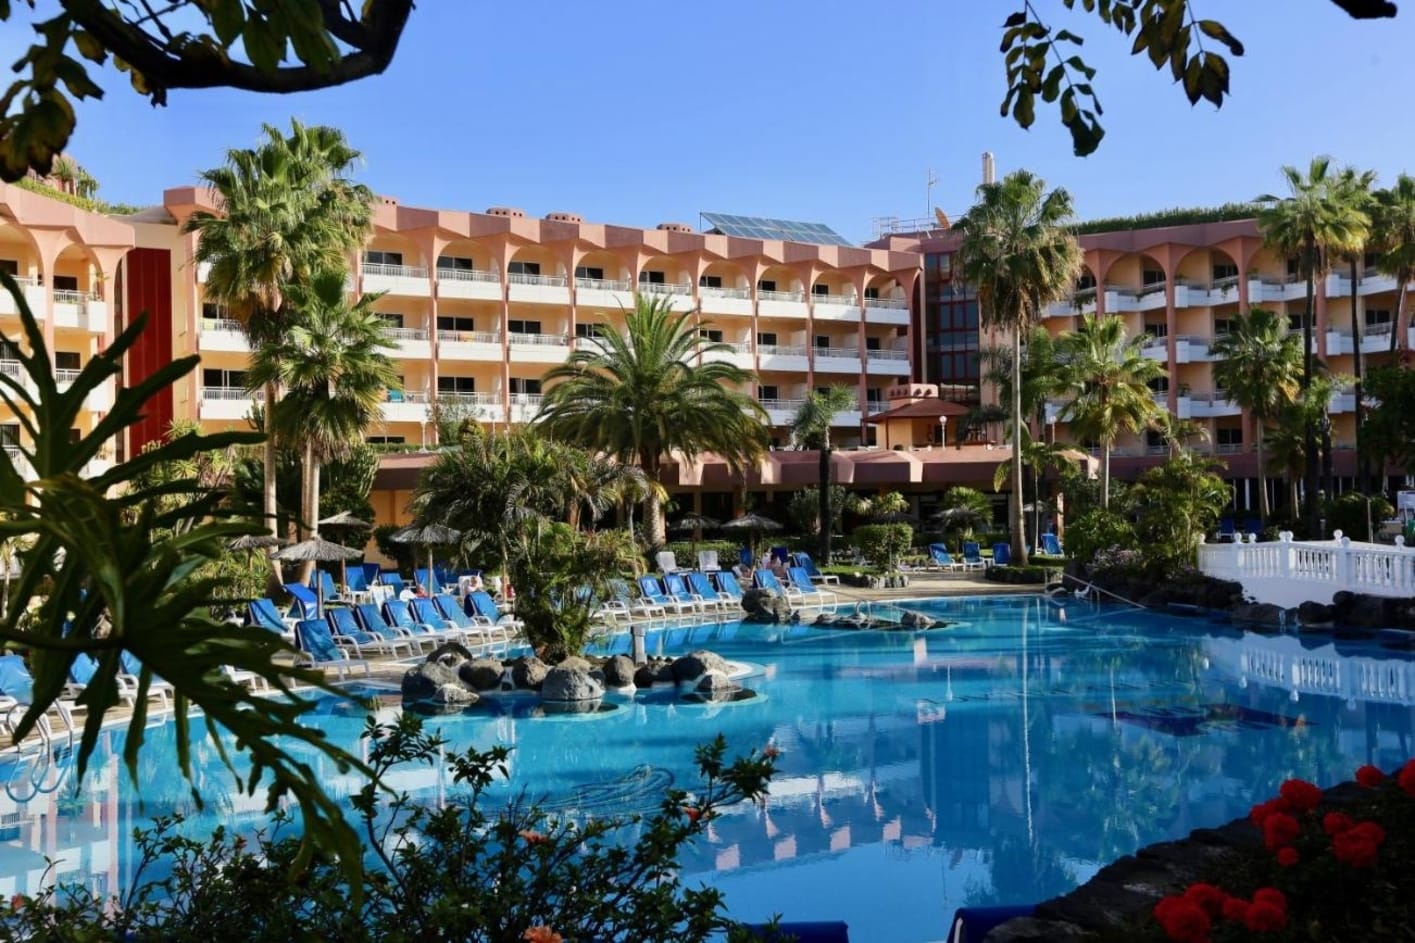 Puerto Palace, hoteles baratos Tenerife norte con piscina